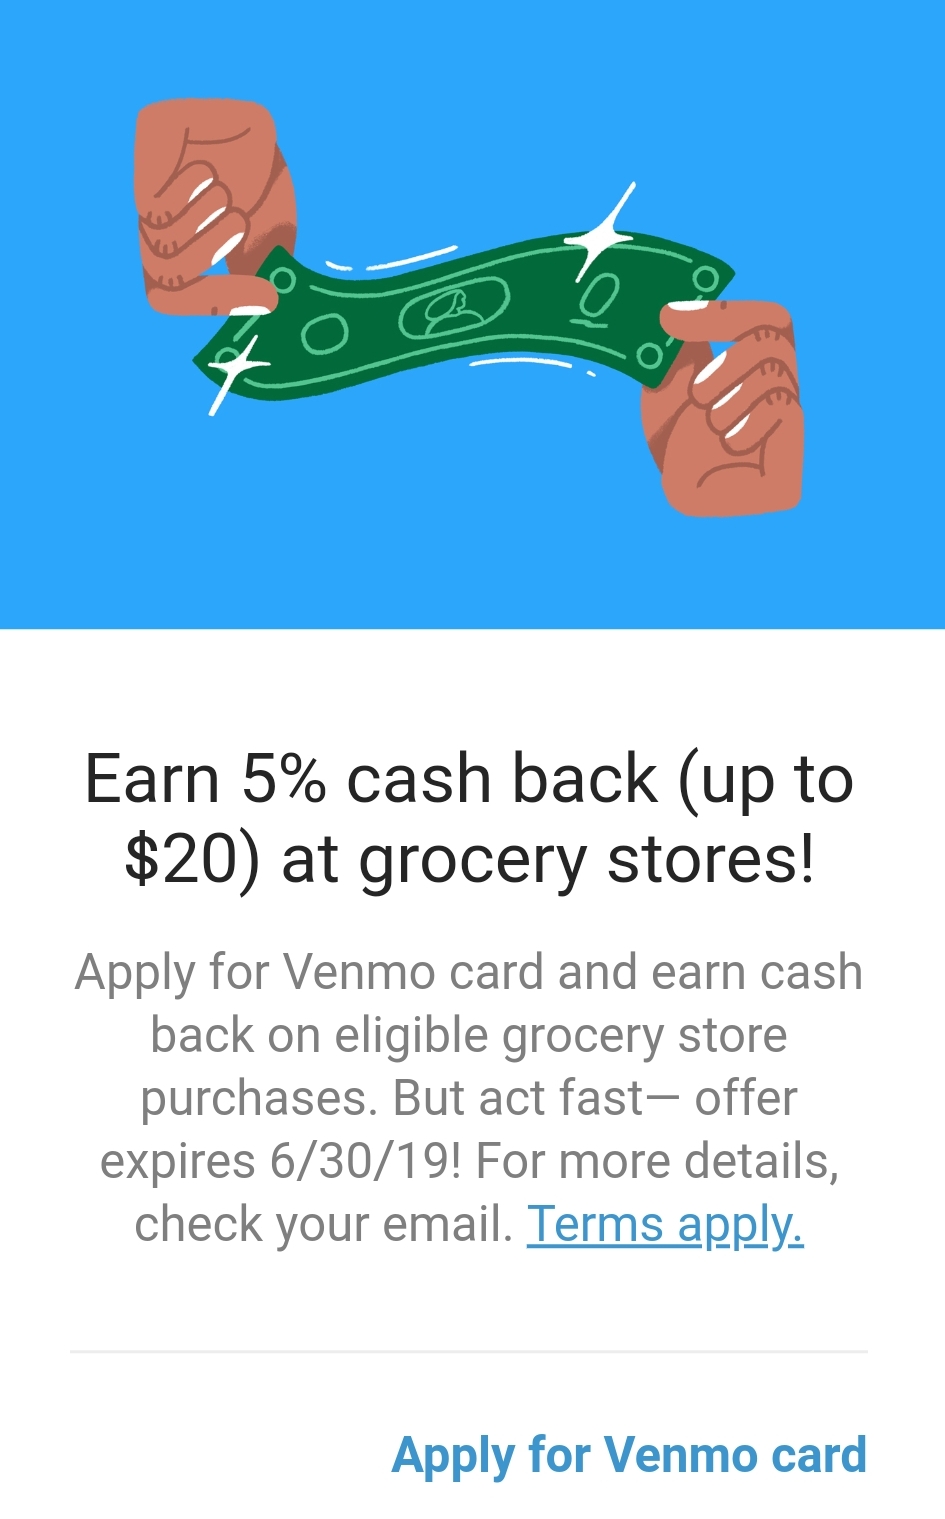 venmo card 5% on groceries